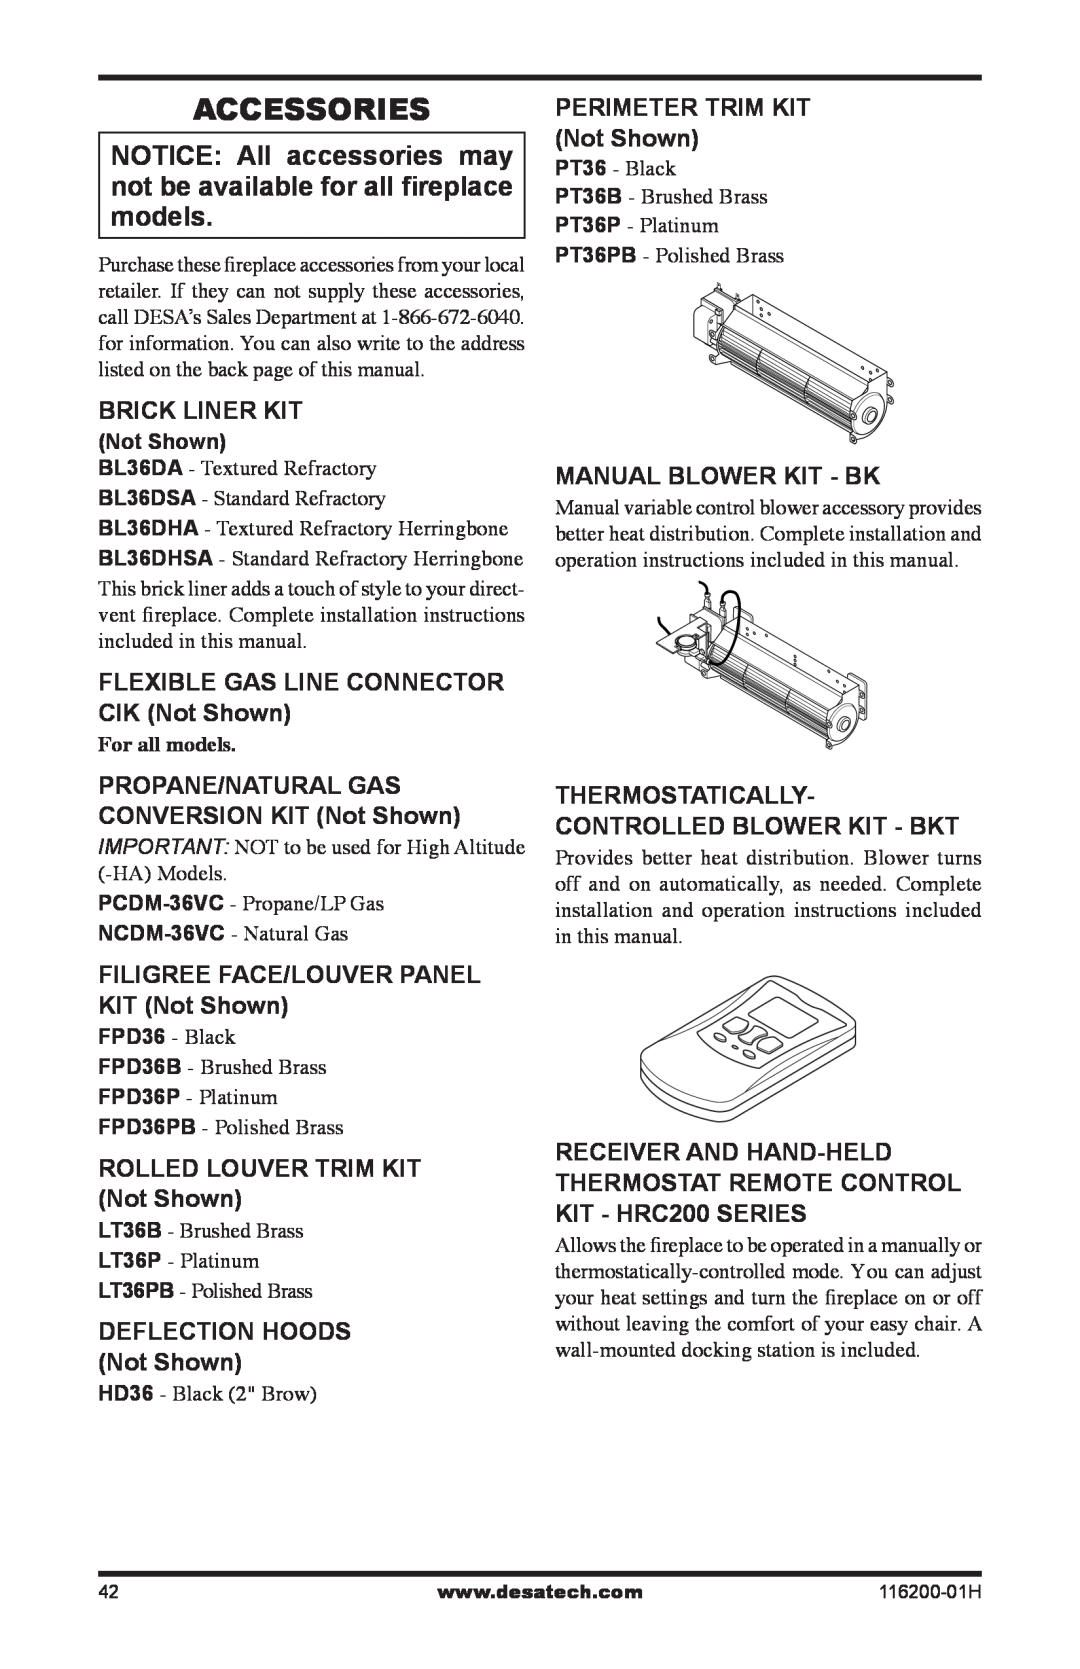 Desa (V)VC36P Series Brick Liner kit, Flexible gas Line connector CIK Not Shown, filigree Face/Louver Panel kit Not Shown 